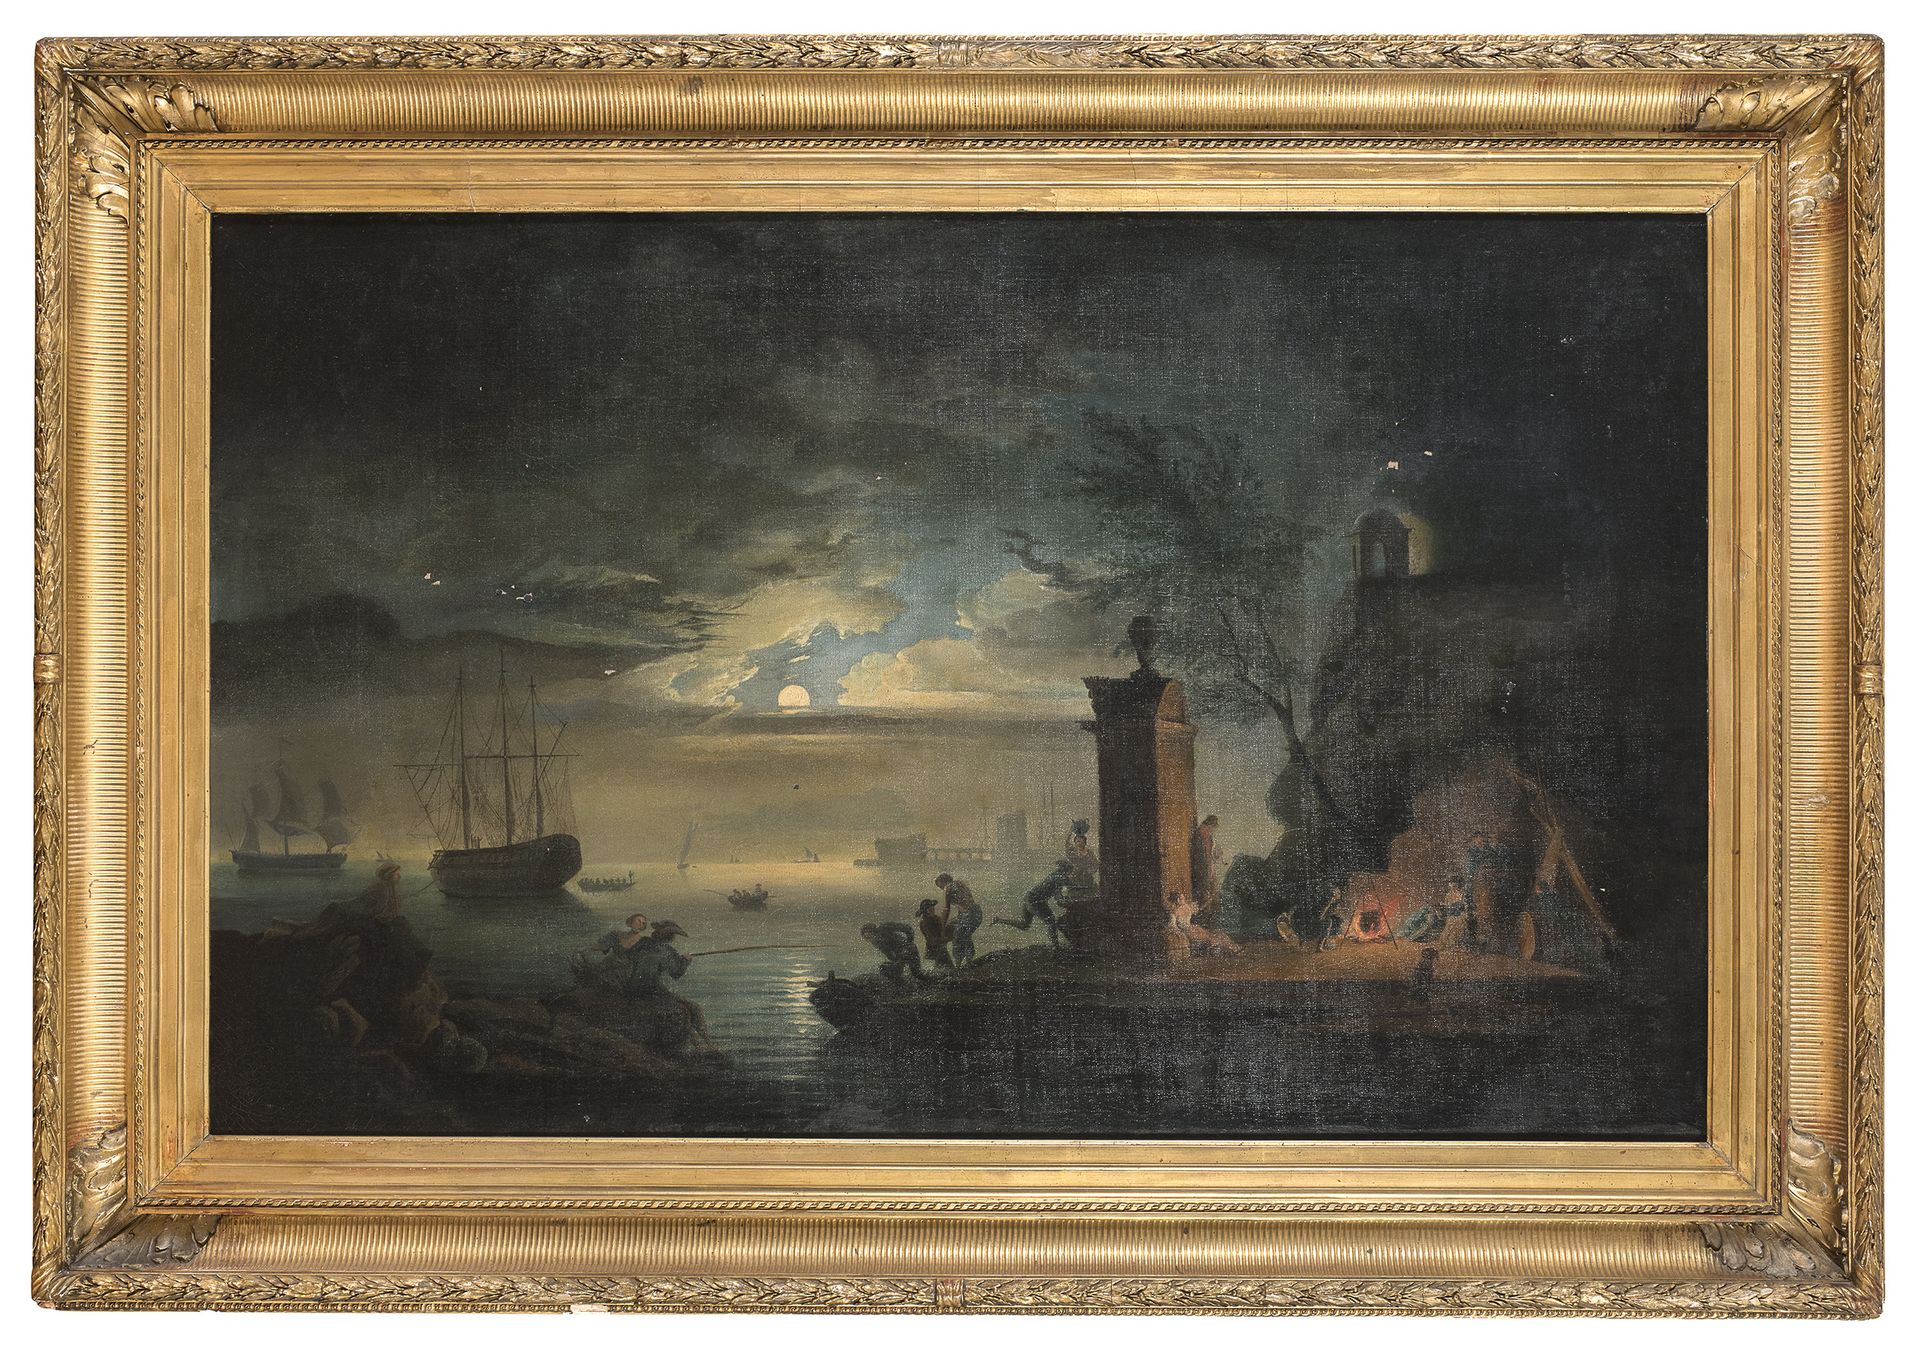 Null 那不勒斯画家，19世纪



带有港口景观、篝火和渔民的夜曲

布面油画，79 x 128厘米

无符号



框架

大型镀金木质手套盒框架，内侧有&hellip;